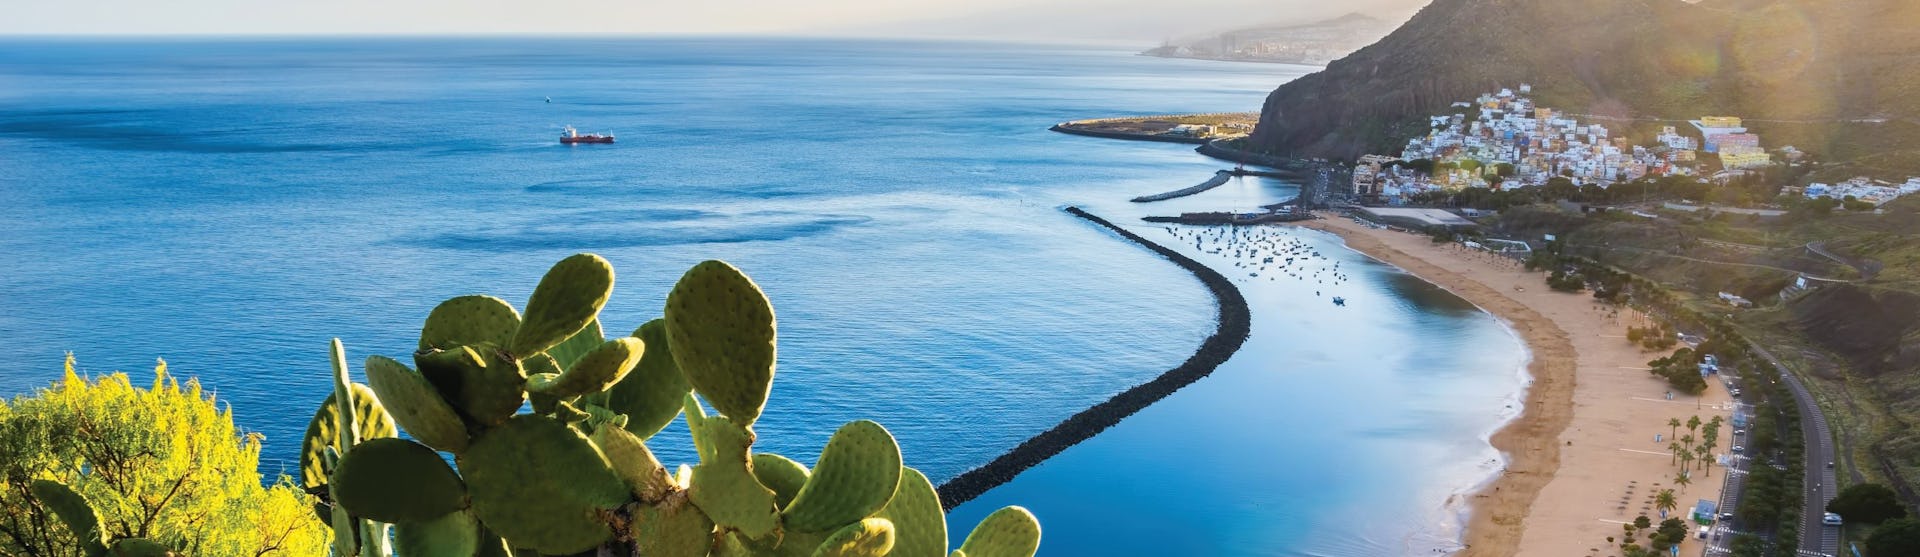 Tenerife-Canary Islands